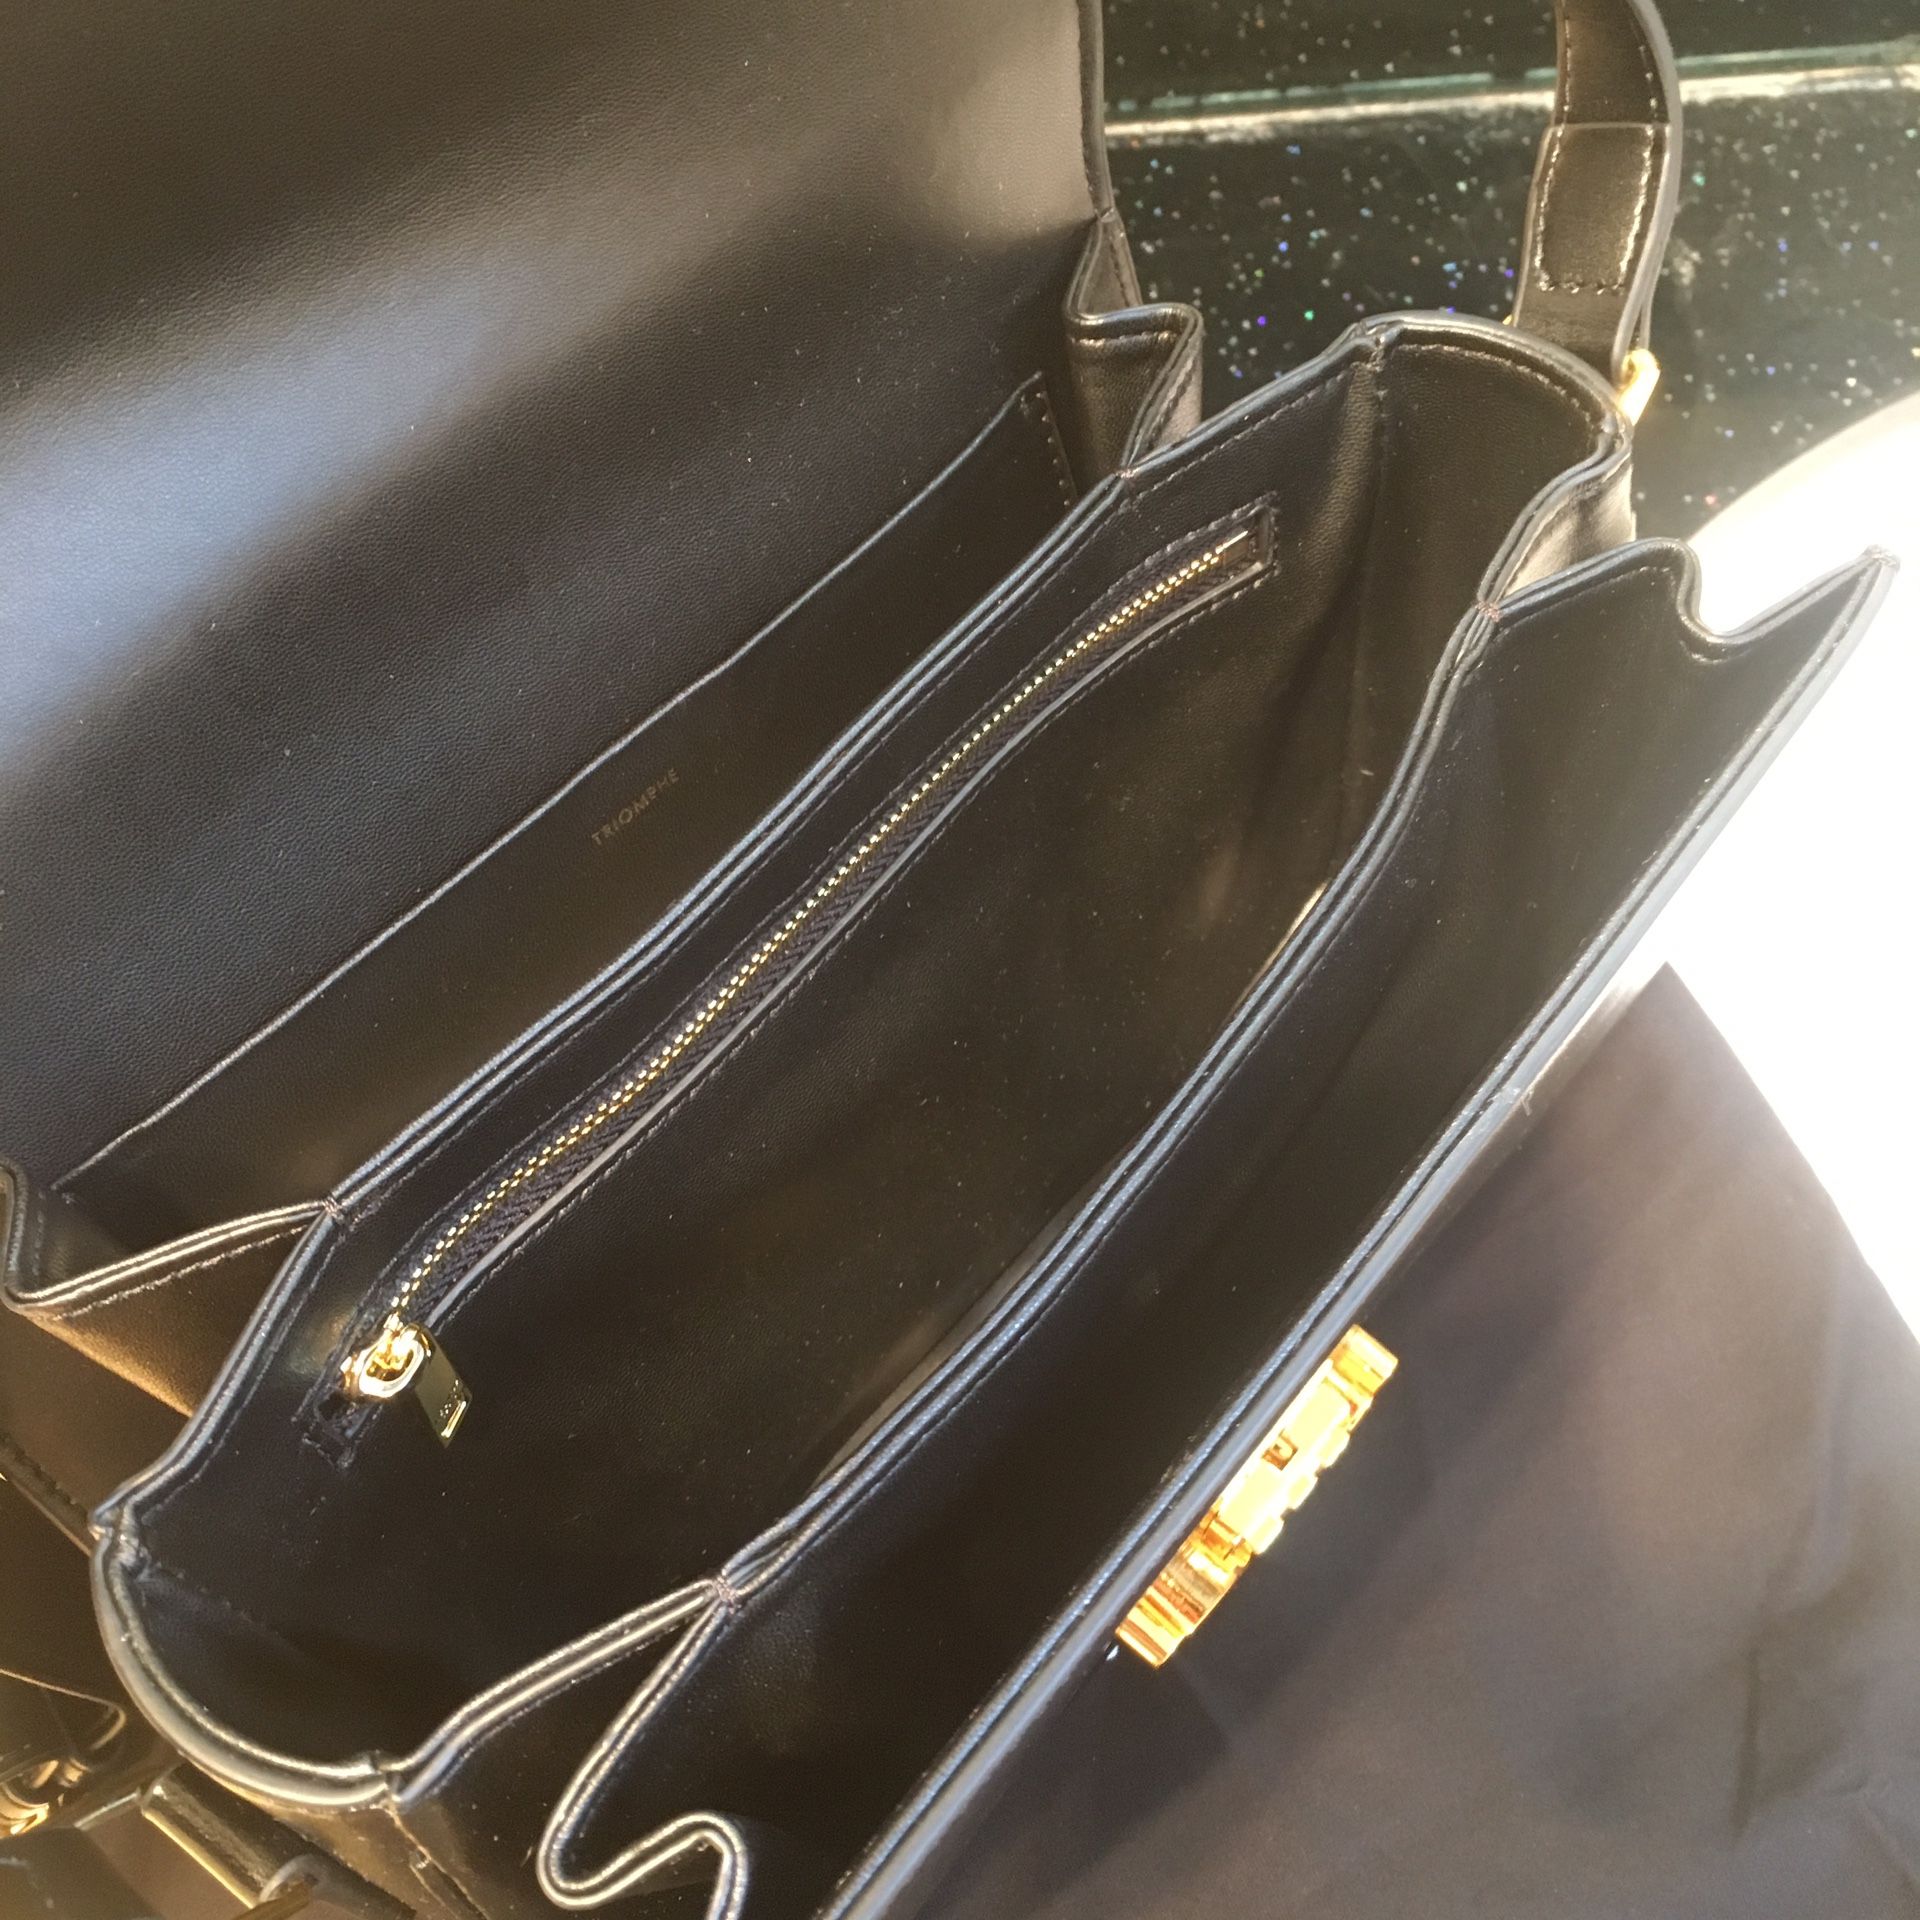 Authentic CELINE BROWN TRIOMPHE Shoulder Bag for Sale in Madisonville, KY -  OfferUp